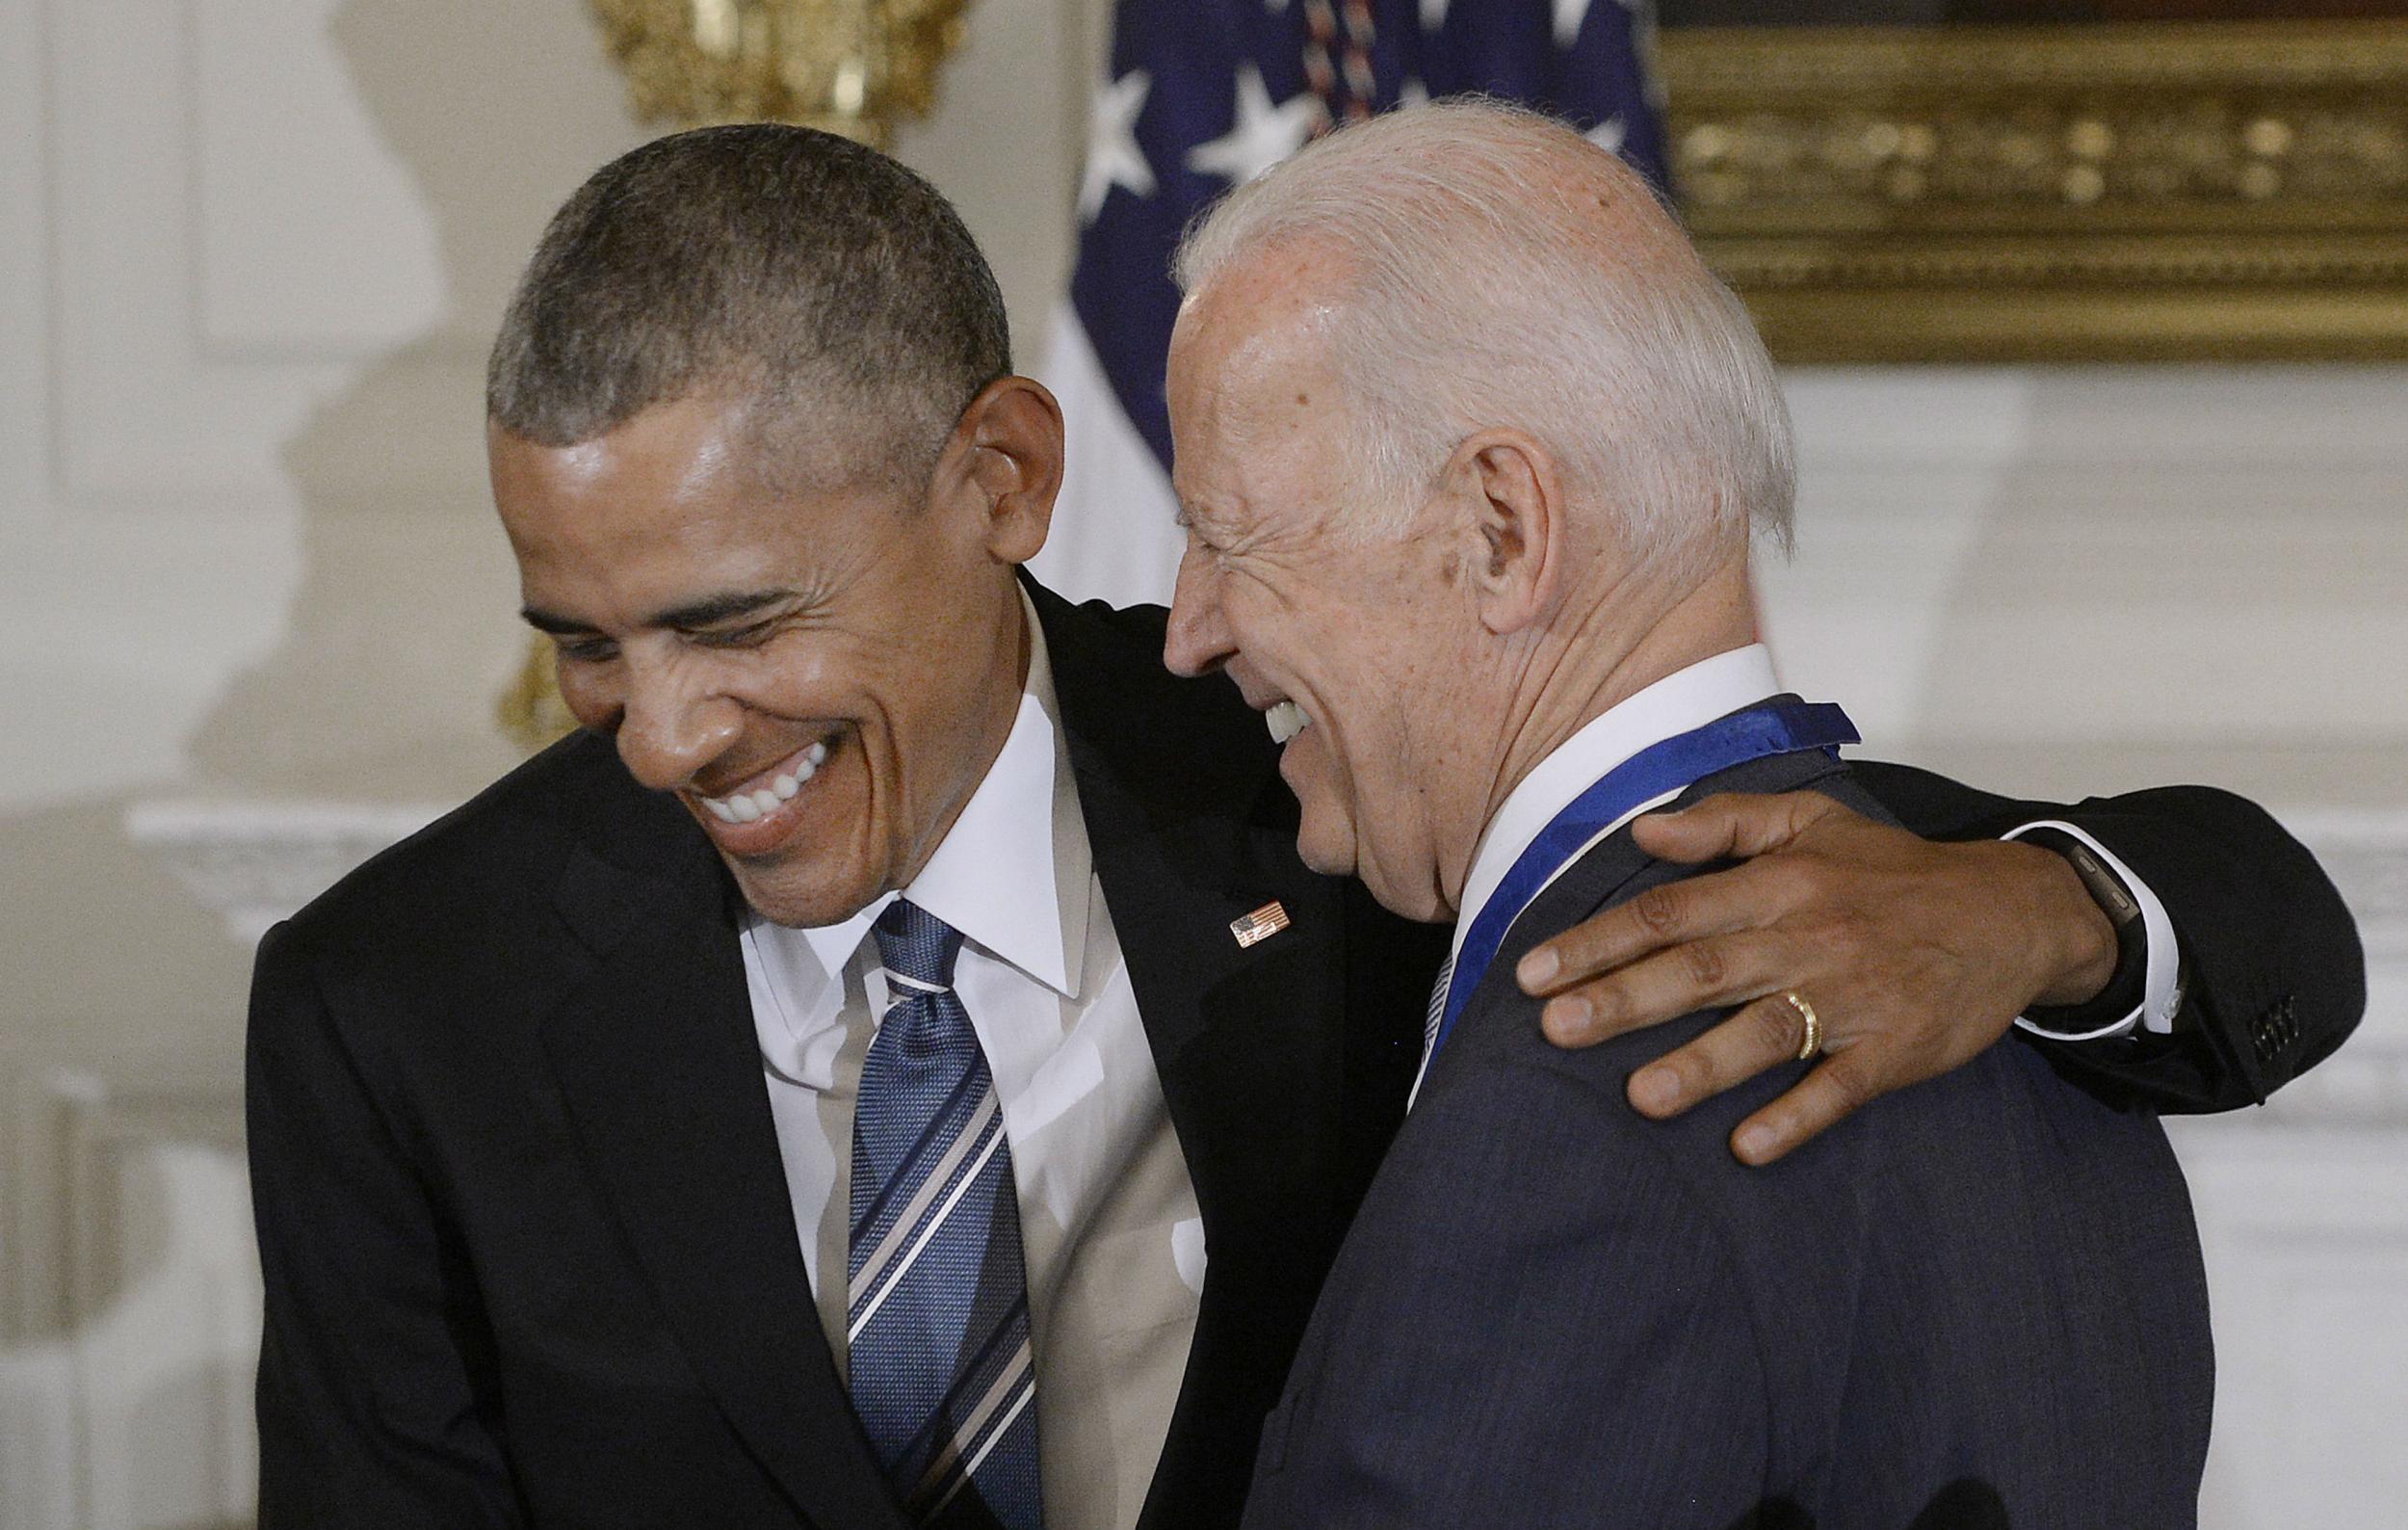 Joe Biden would nominate Obama to Supreme Court 'if he'd take it'